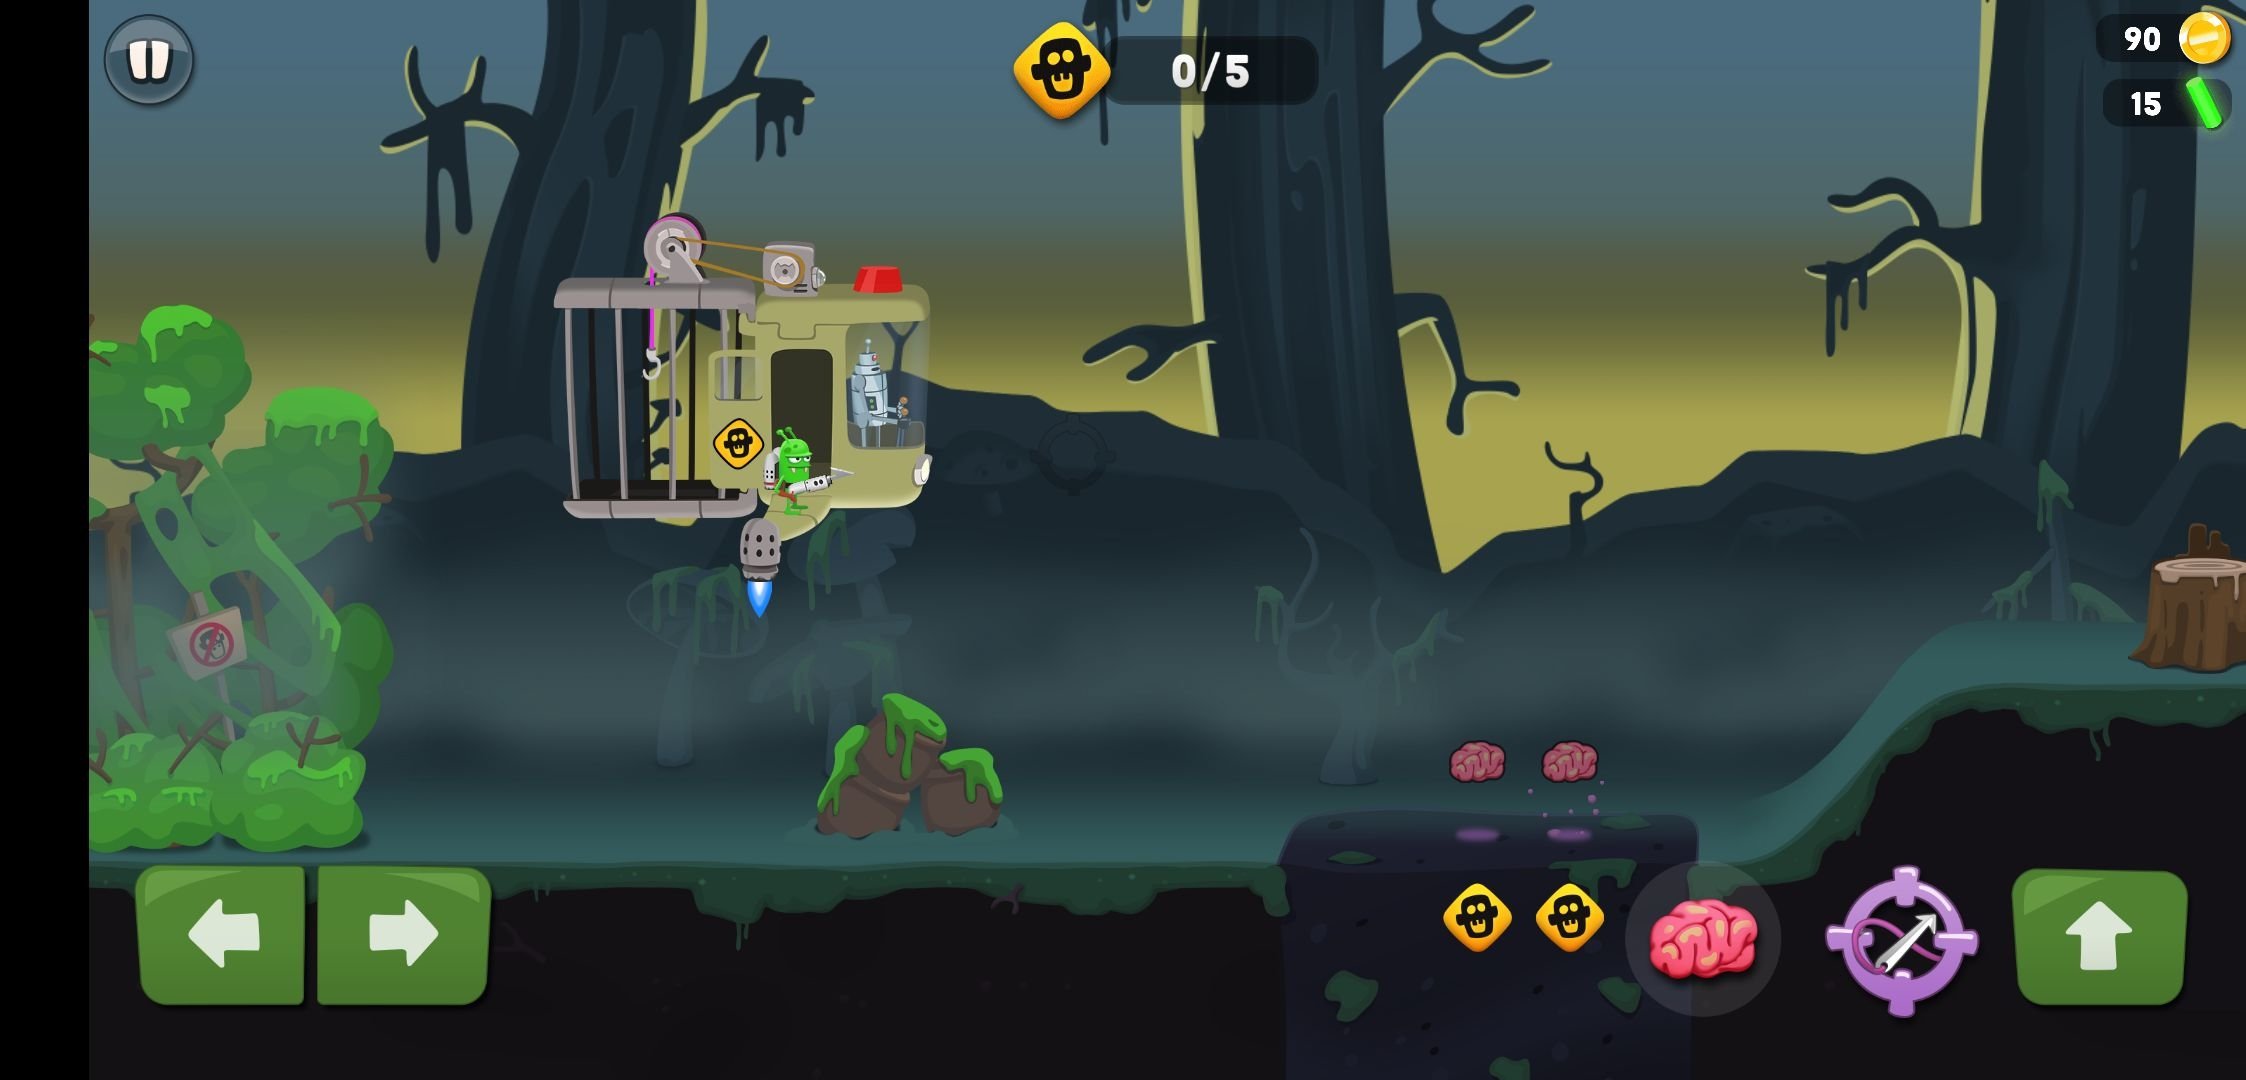 Zombie Catchers APK (Android Game) - Baixar Grátis